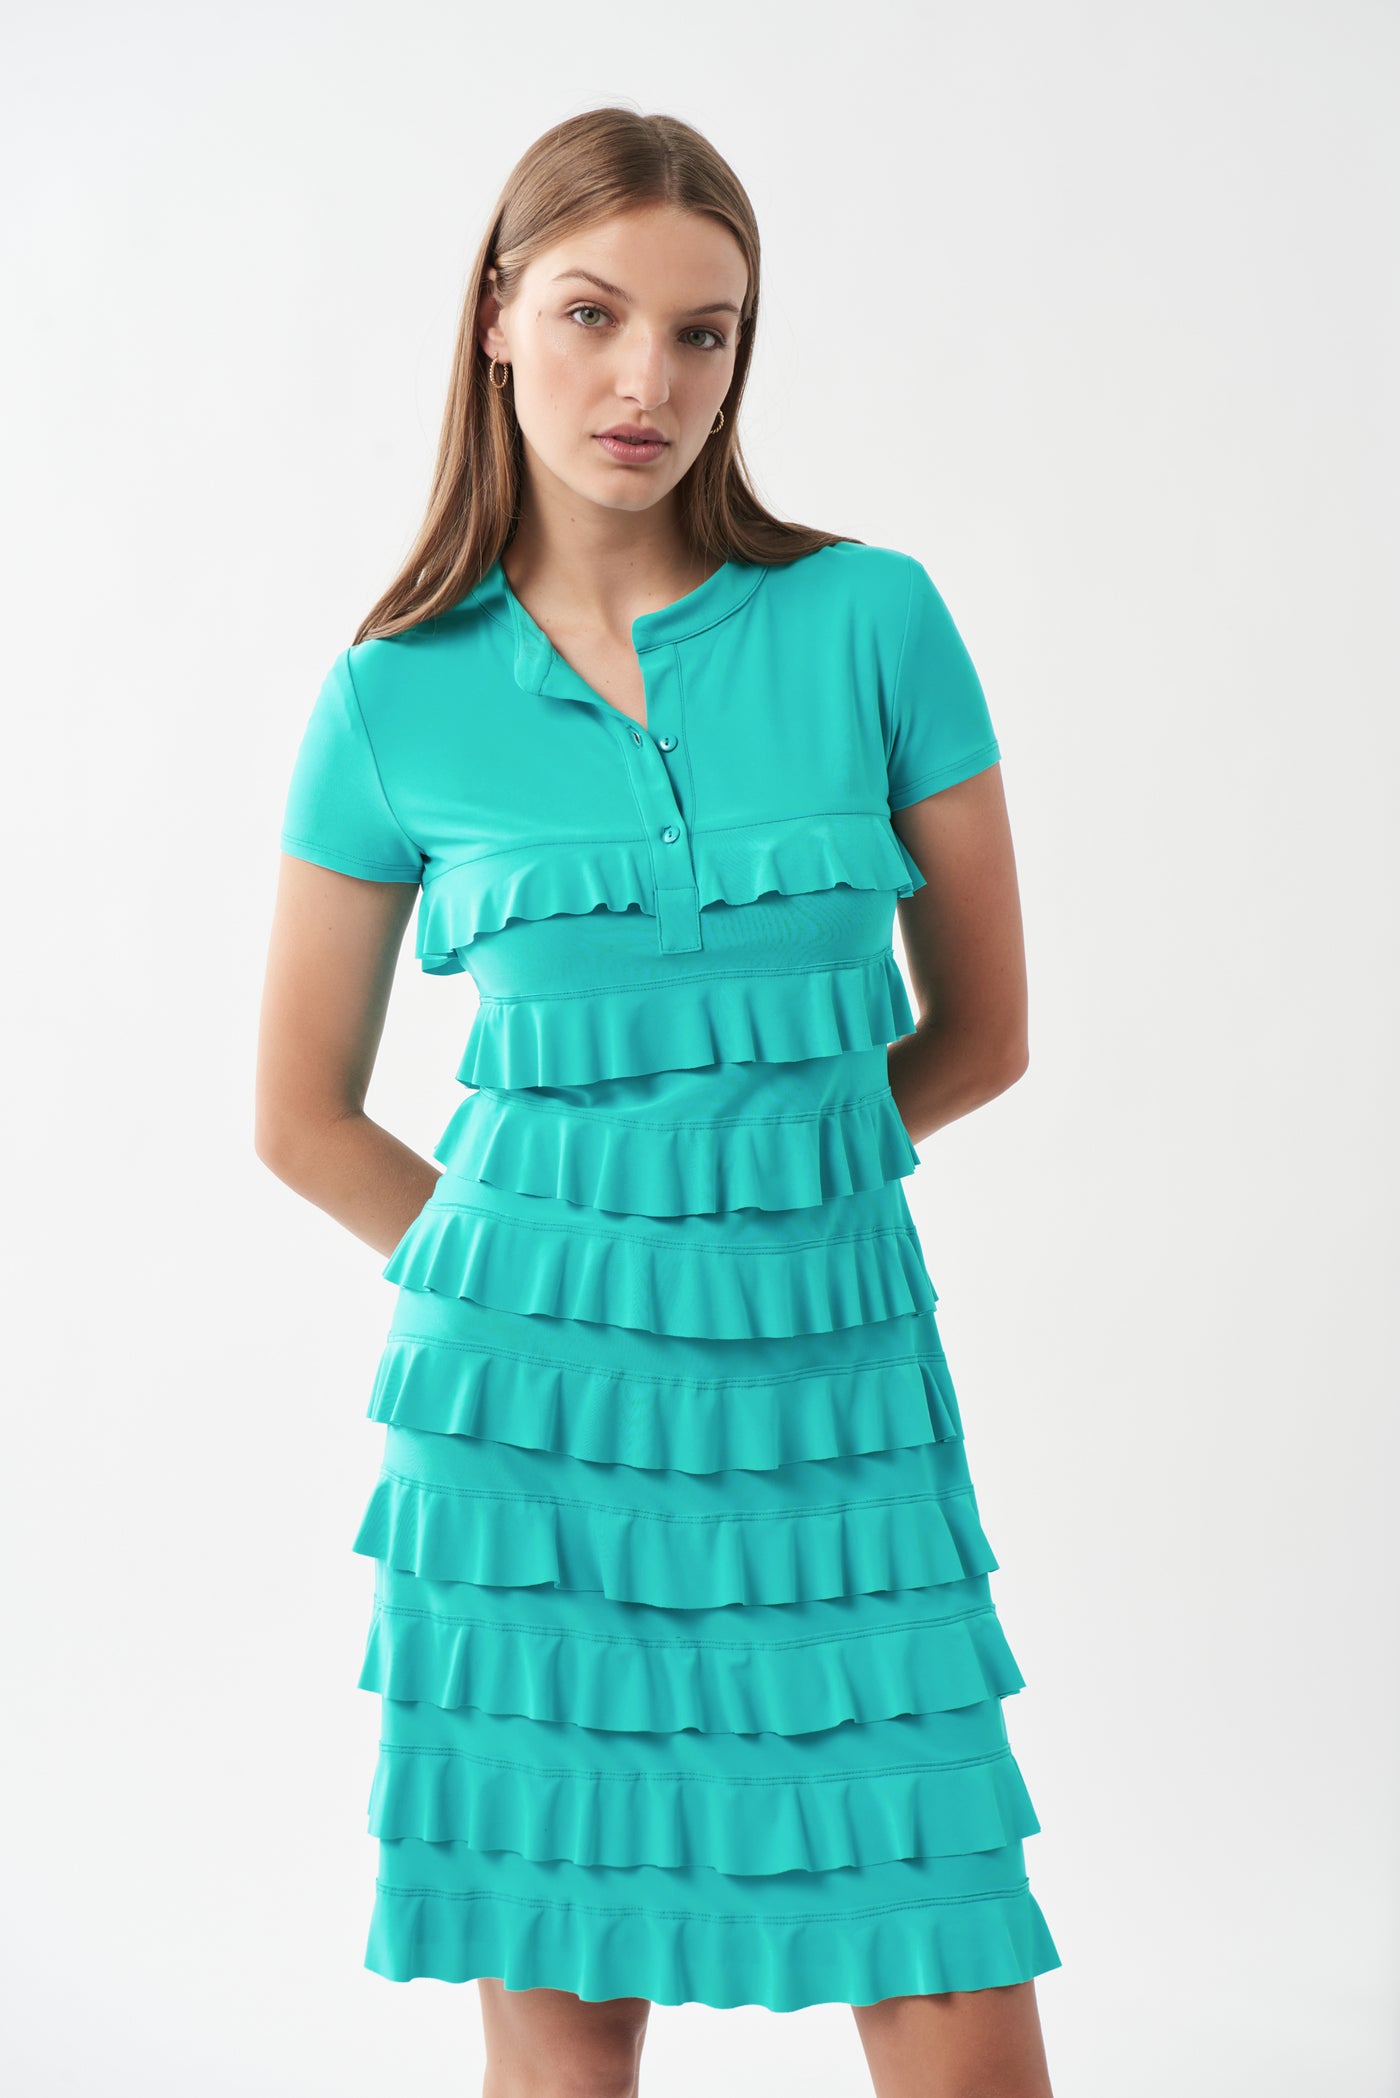 Joseph Ribkoff Dress Style 211350 - Aruba